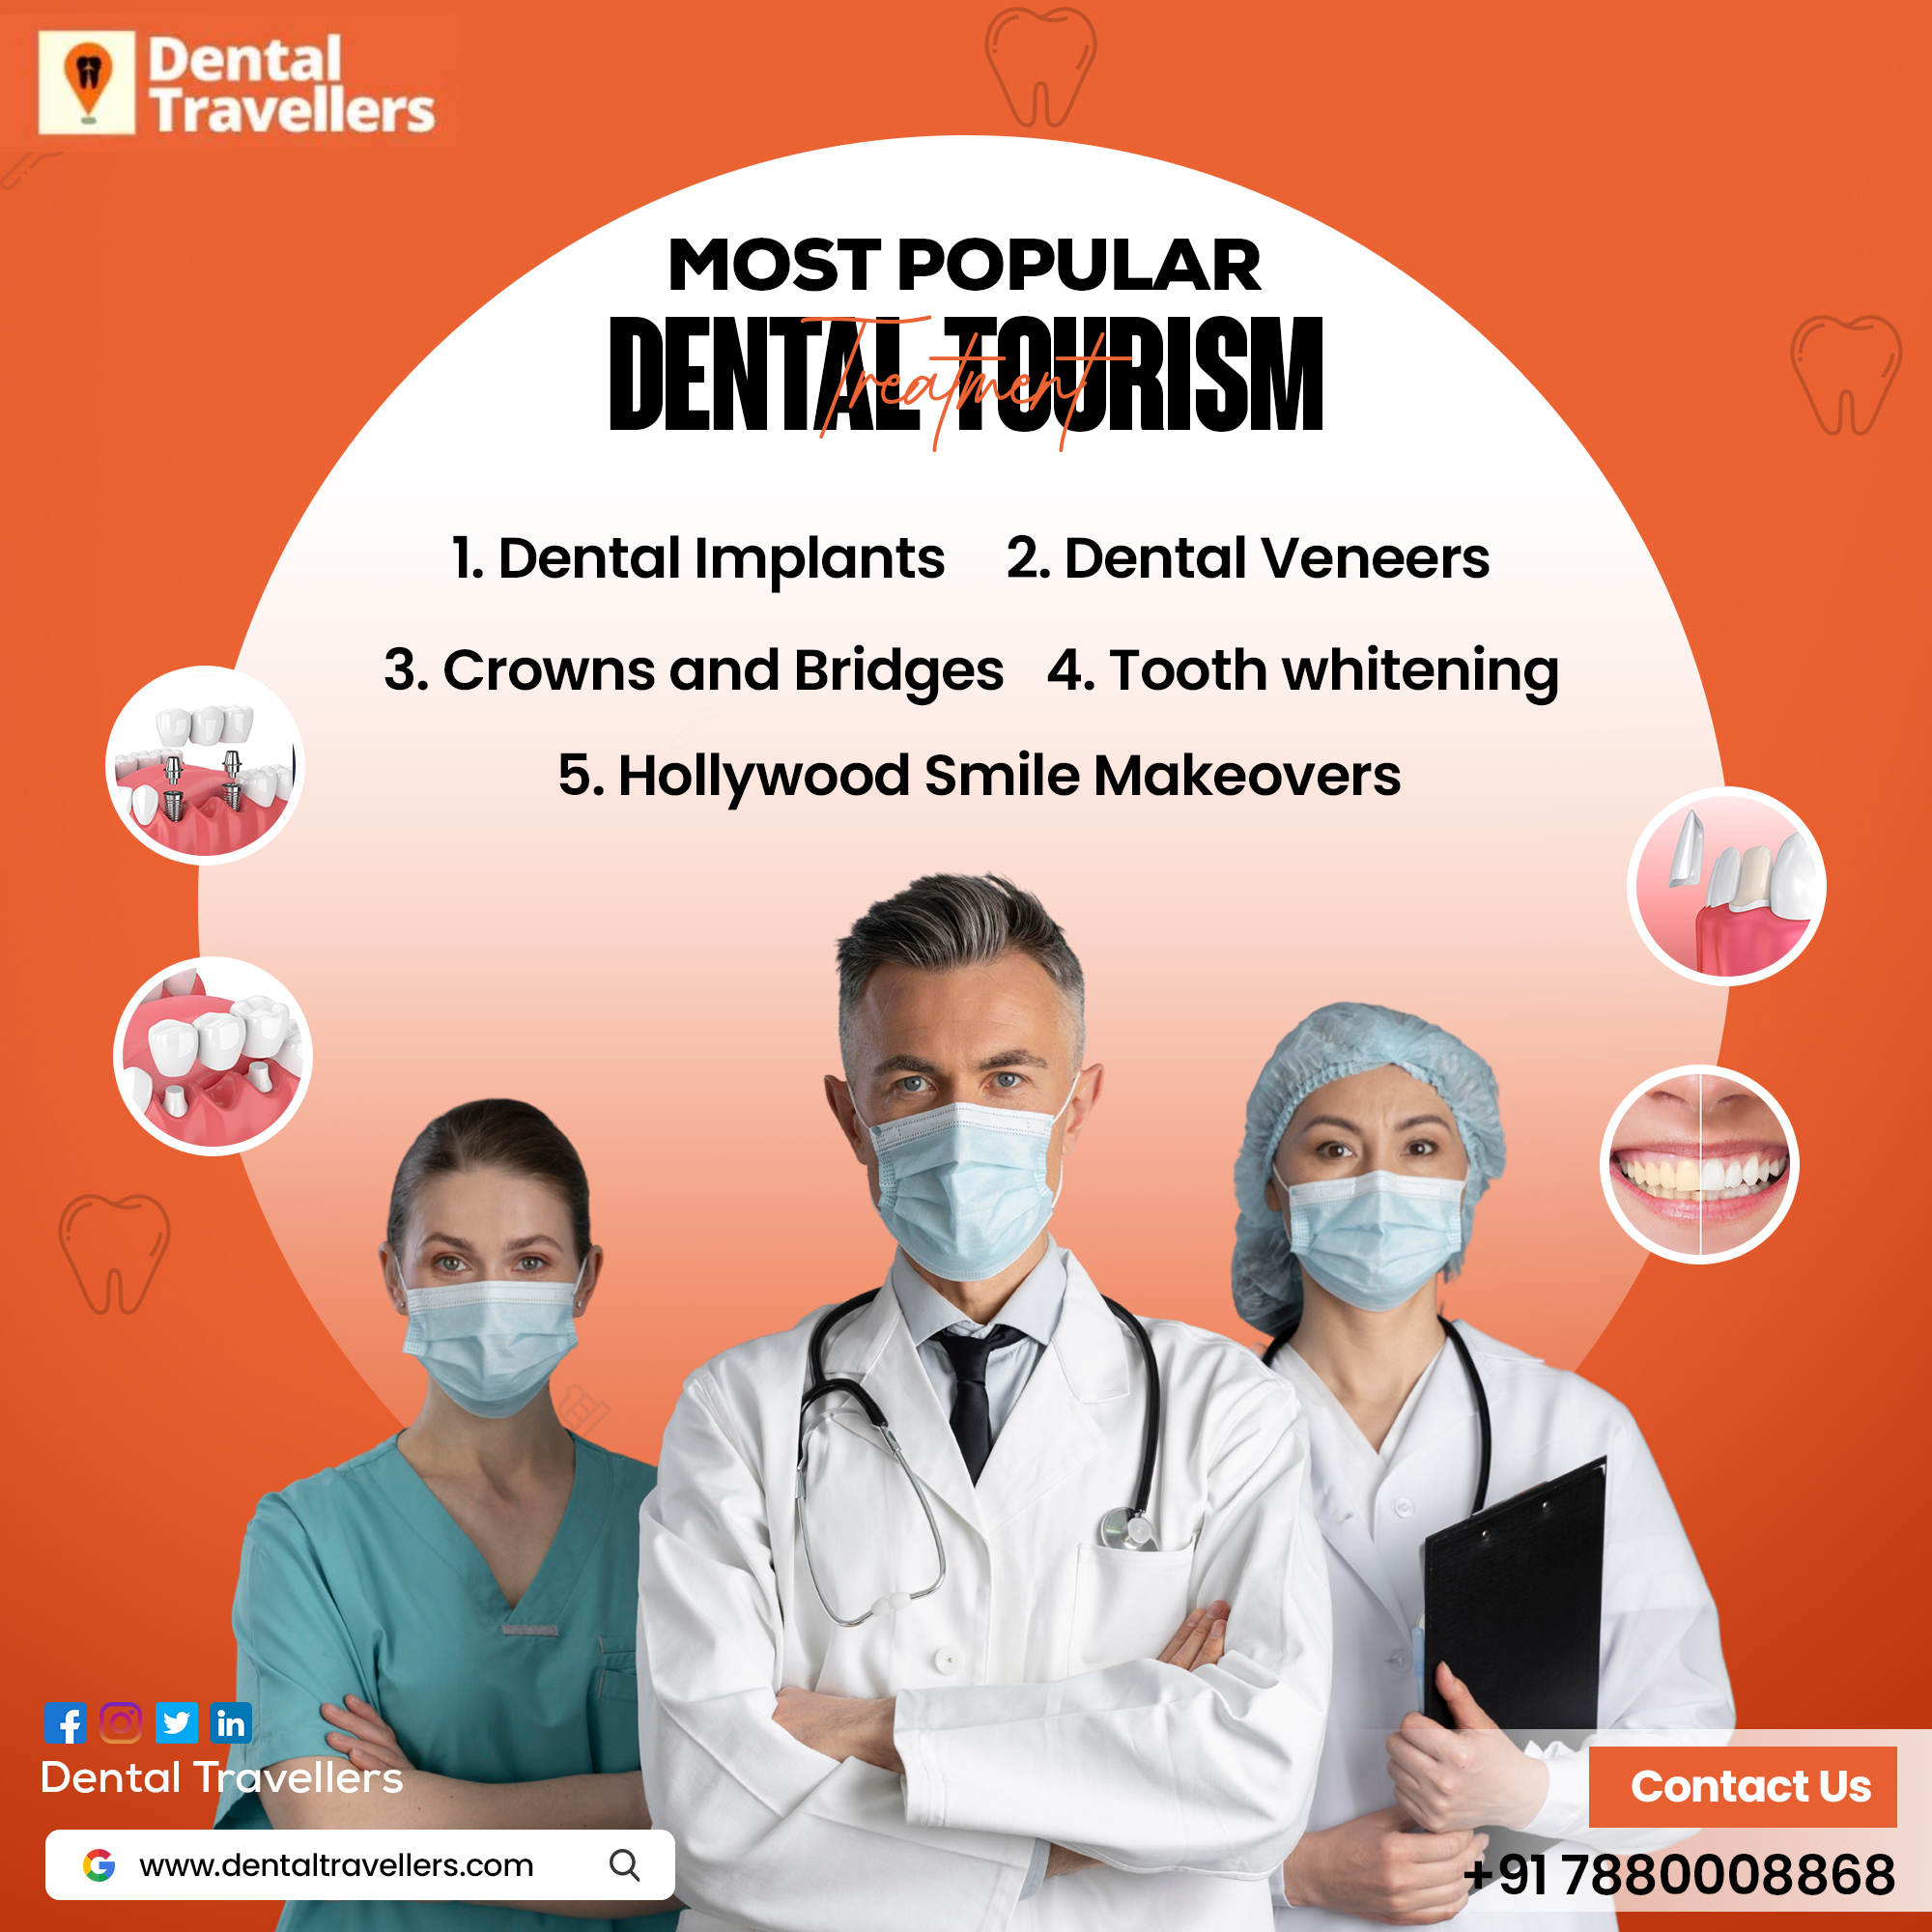 Most Popular Dental Tourism Treatments